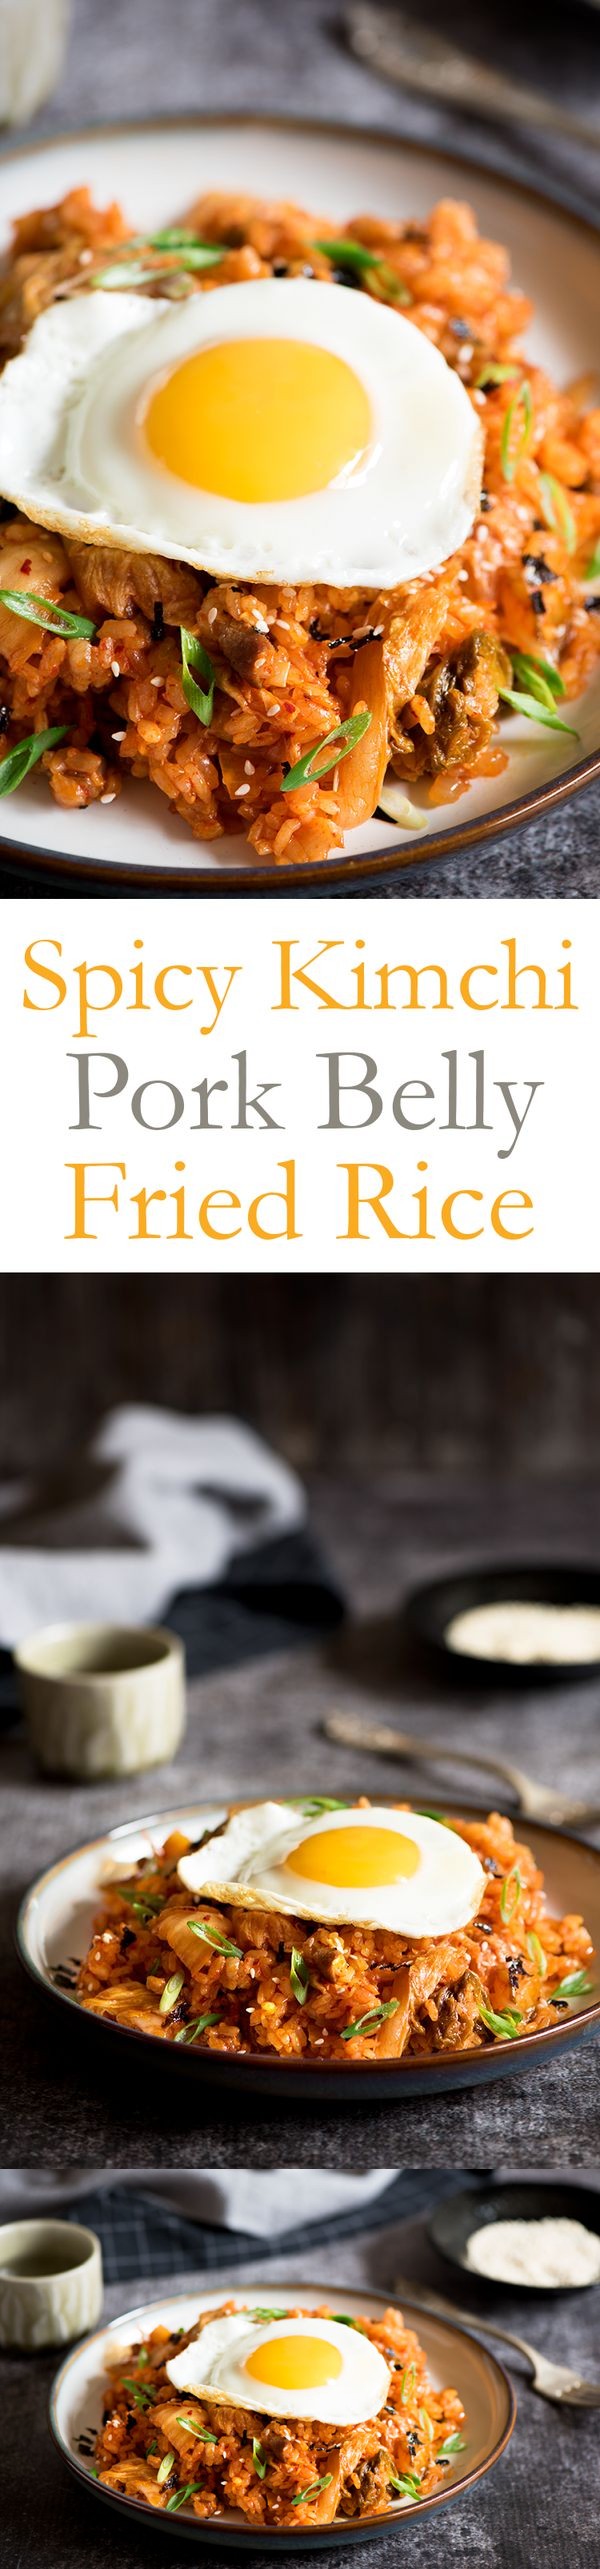 Spicy Kimchi Pork Belly Fried Rice